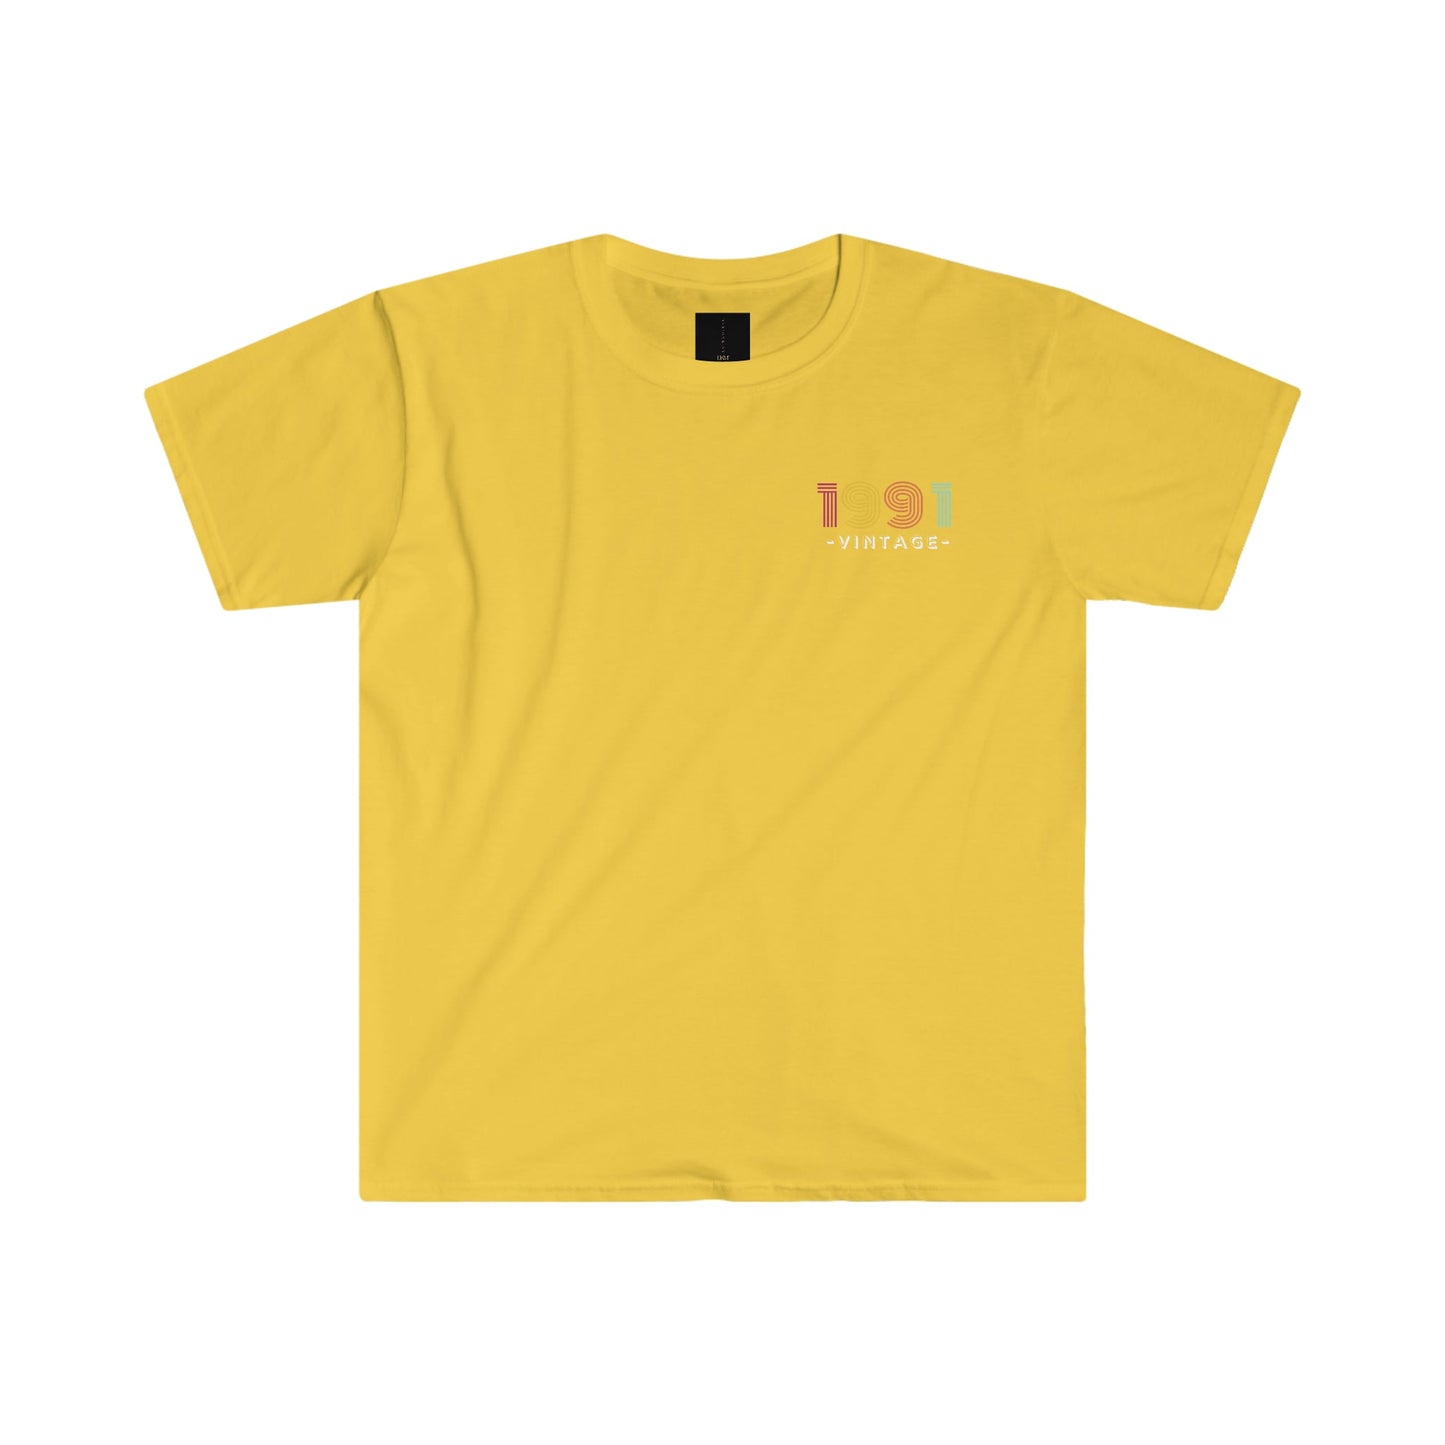 1991 Vintage, Unisex T-Shirt - Designs by DKMc